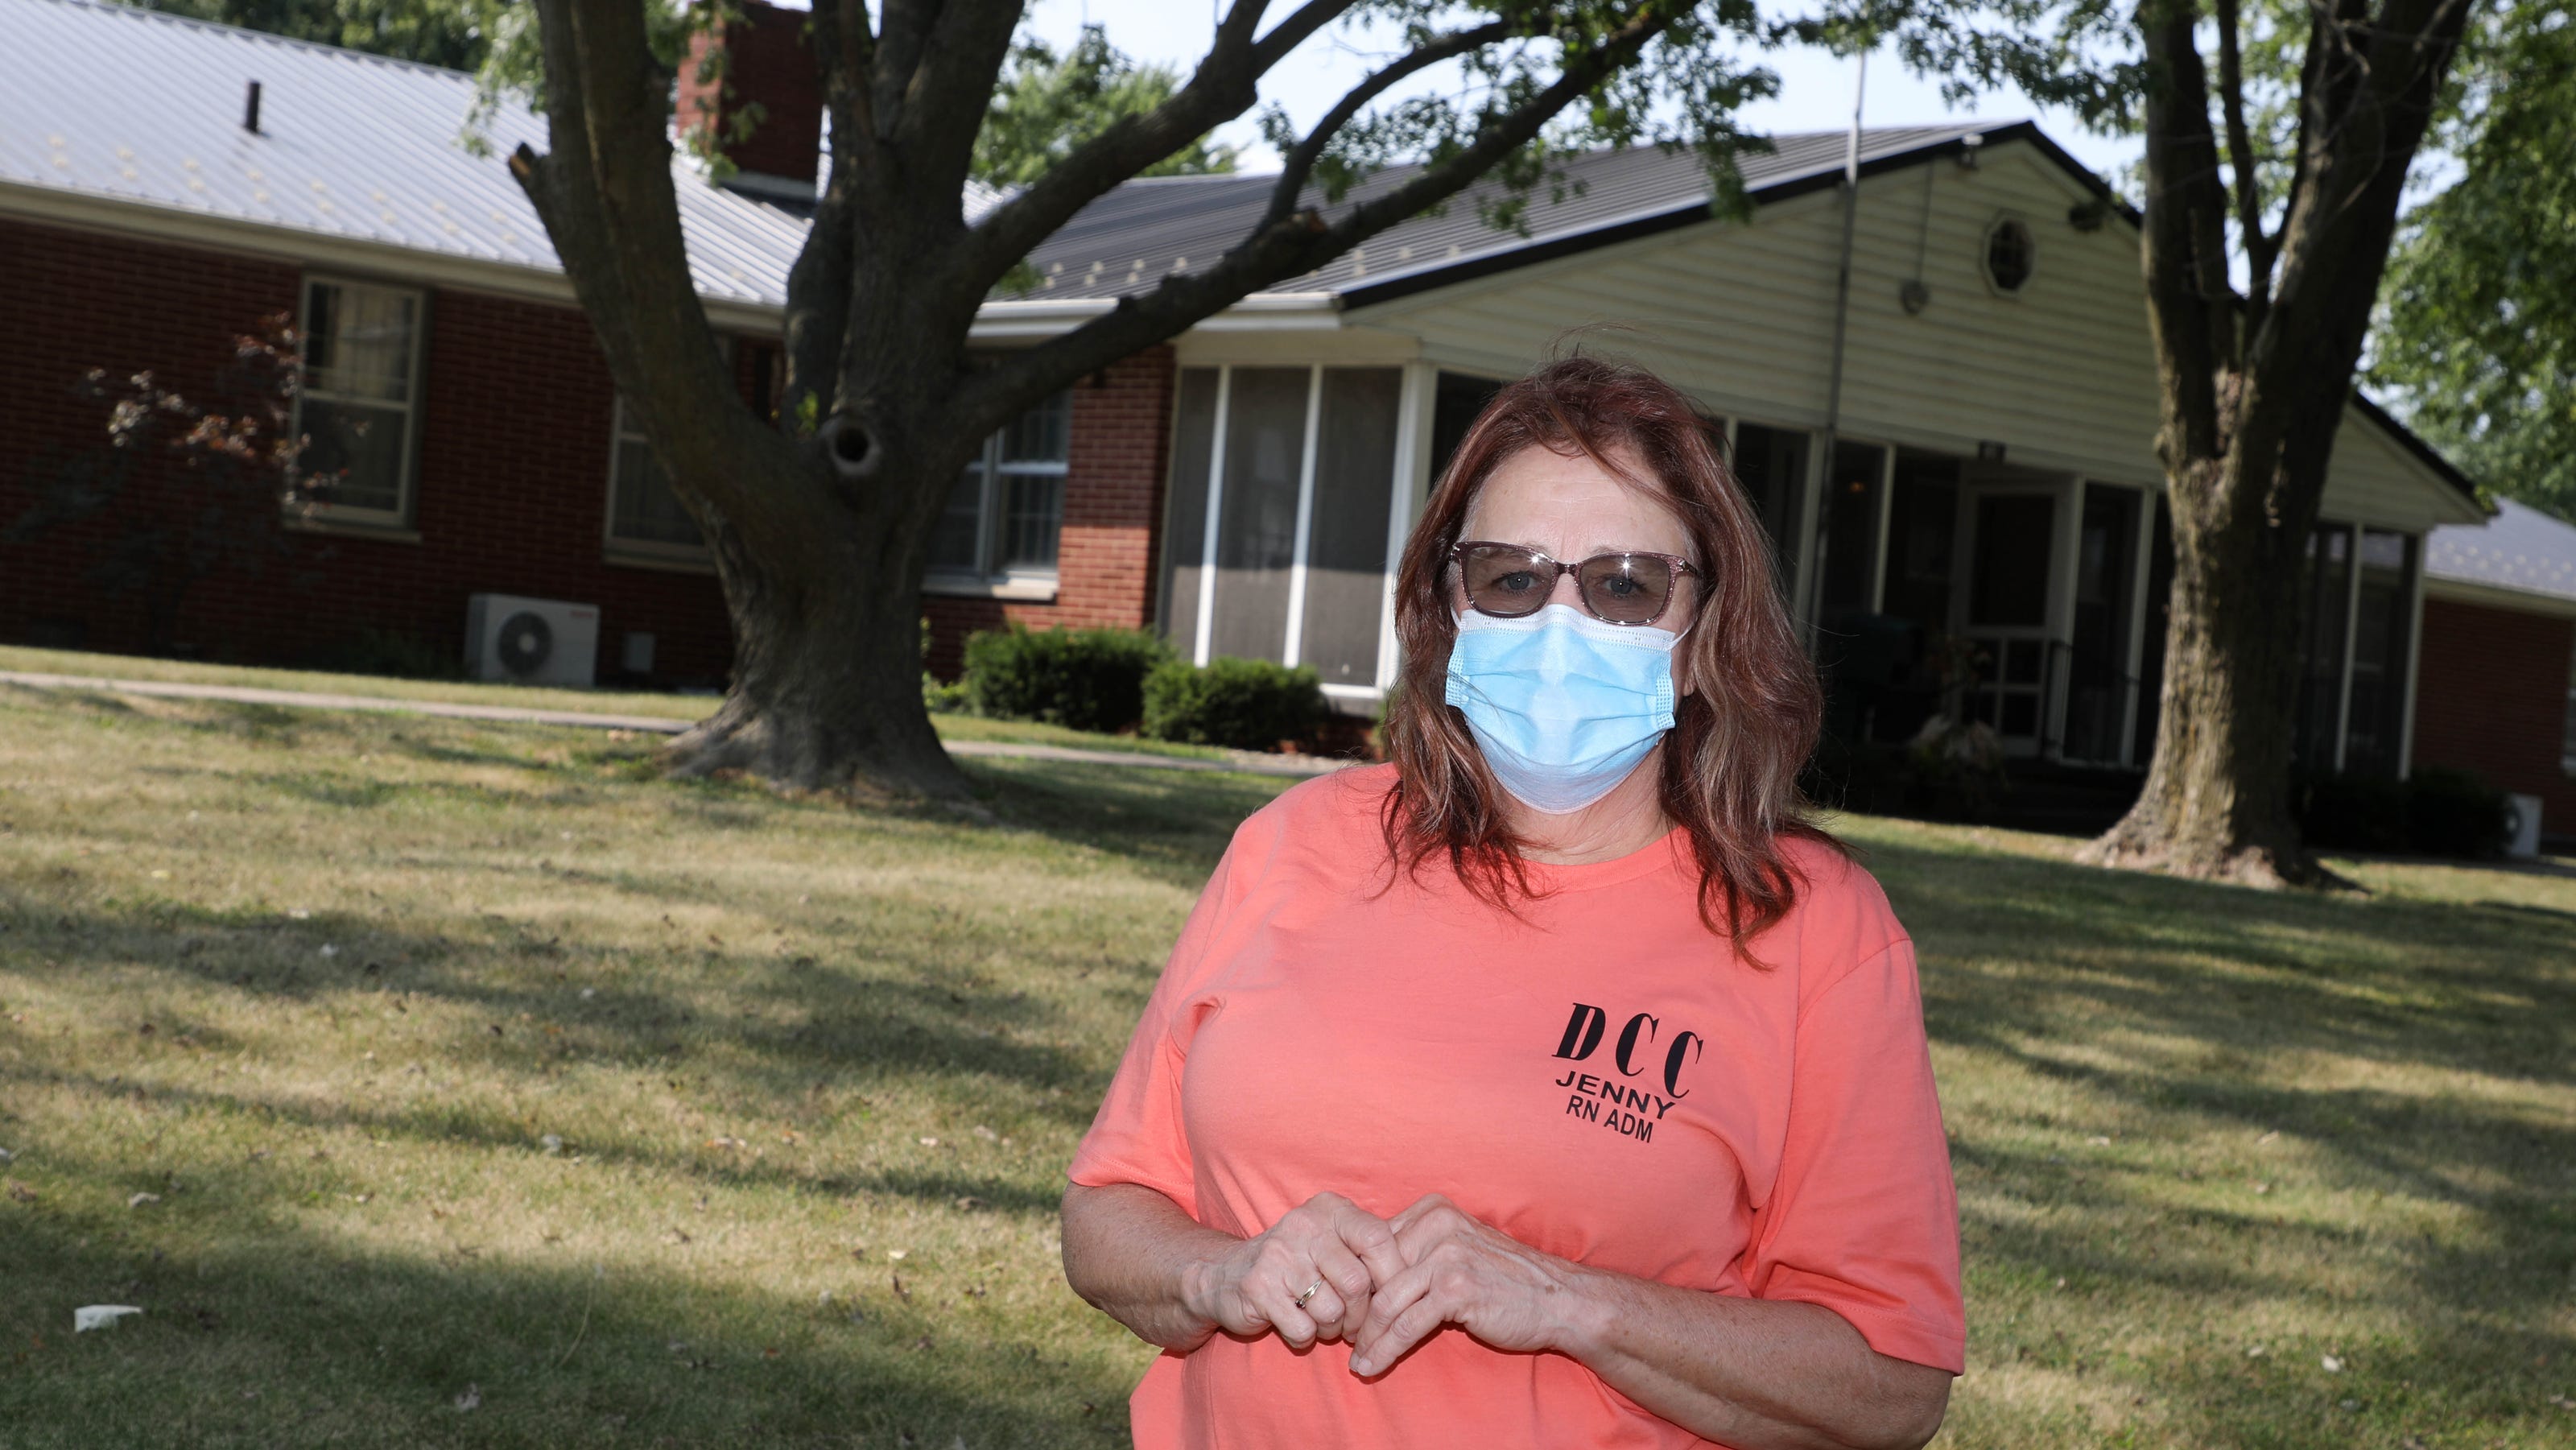 Danville Care Center grapples with COVID-19 outbreak